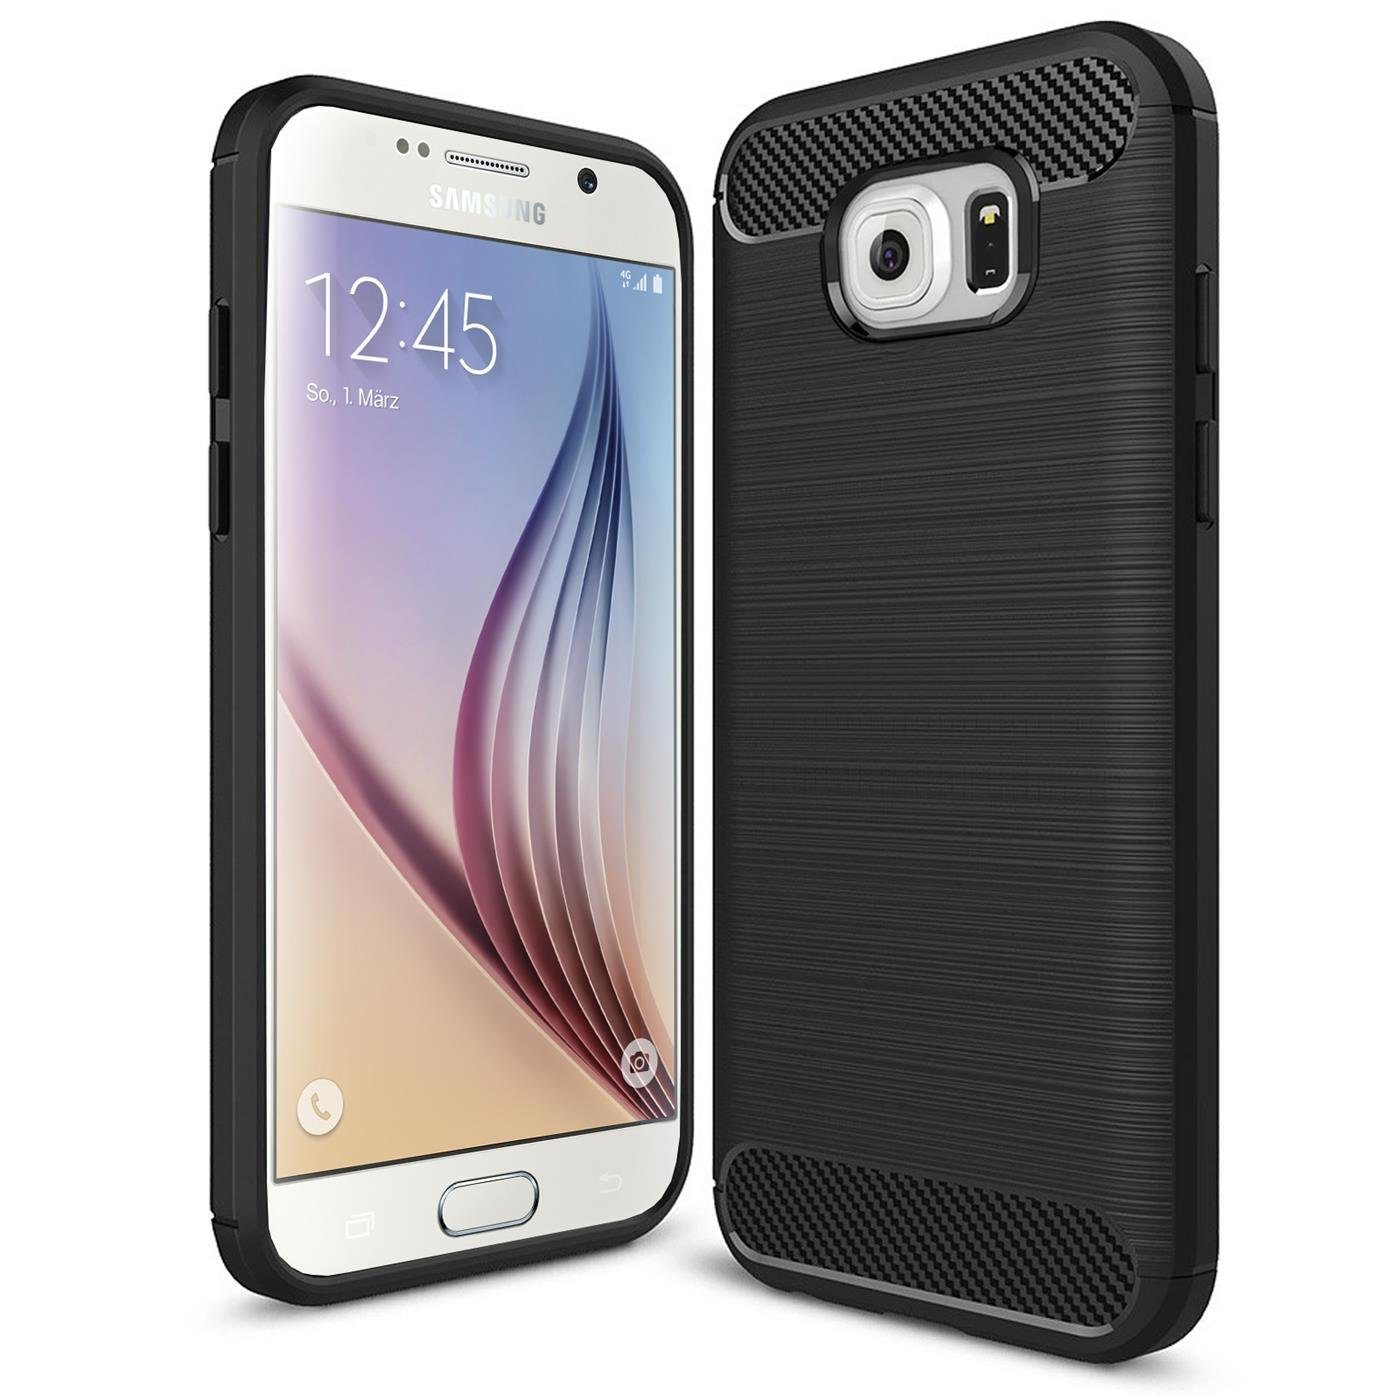 CoolGadget Handyhülle »Carbon Handy Hülle für Samsung Galaxy S6 Edge« 5,1  Zoll, robuste Telefonhülle Case Schutzhülle für Samsung S6 Edge Hülle